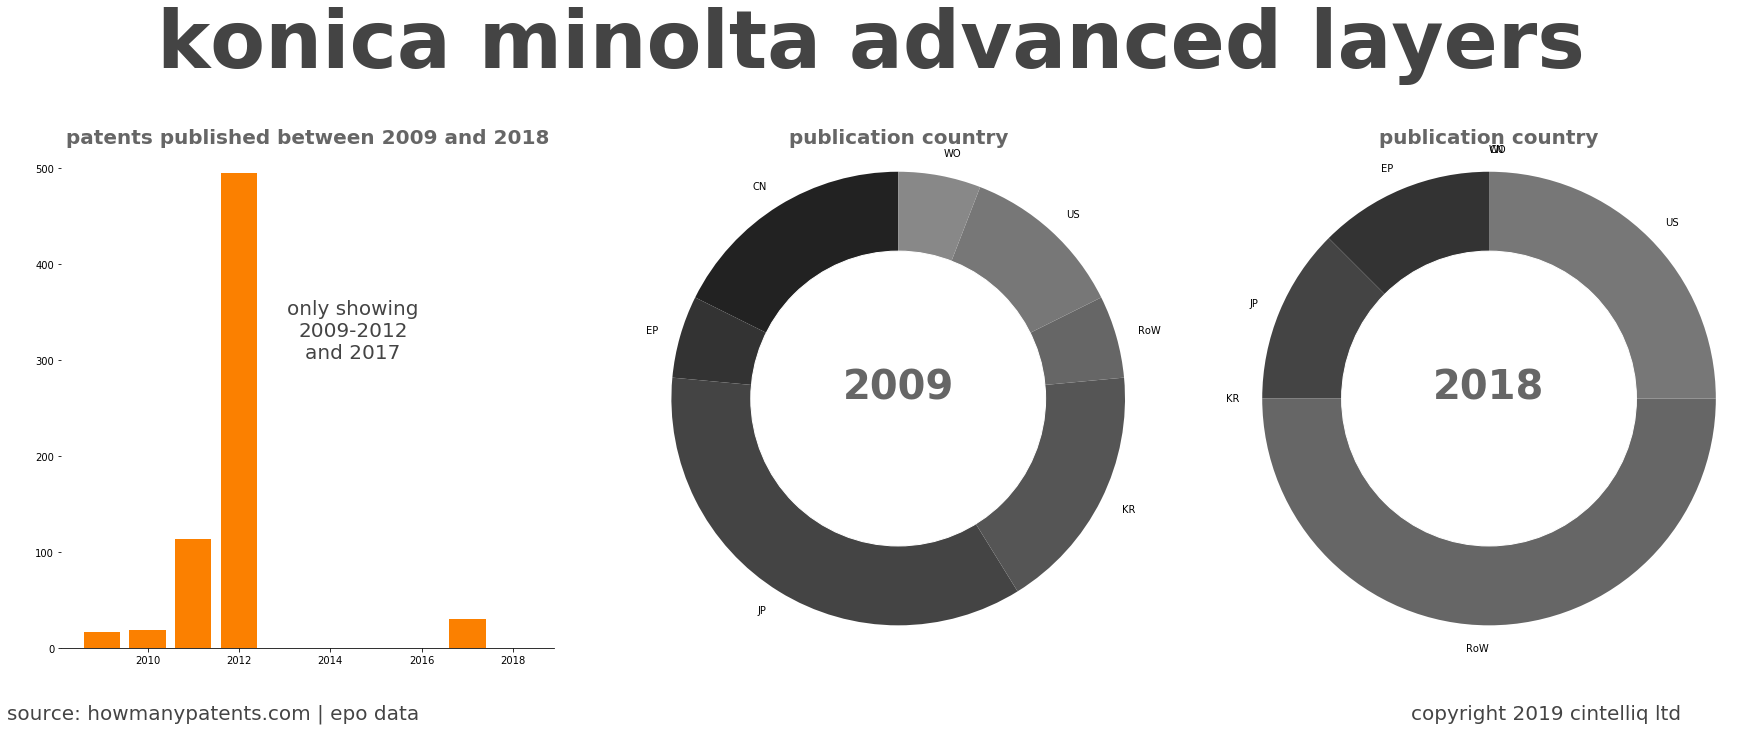 summary of patents for Konica Minolta Advanced Layers